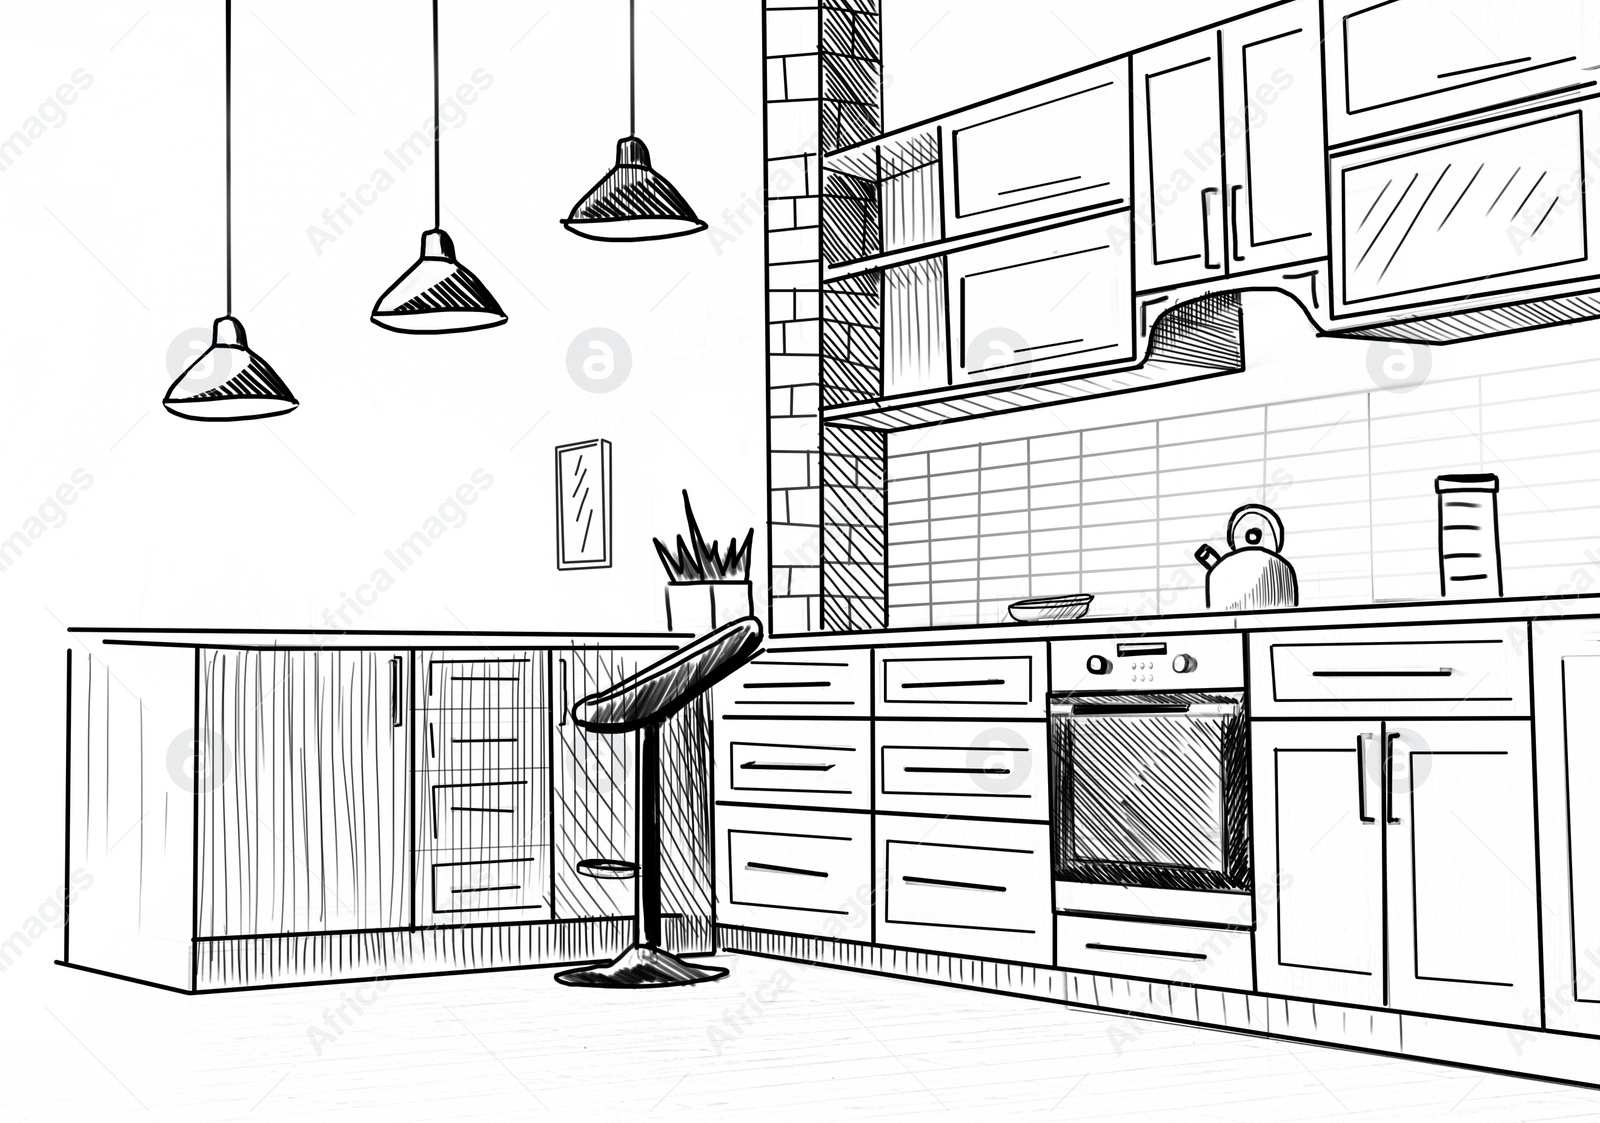 Image of Stylish kitchen interior in apartment. Illustrated interior design